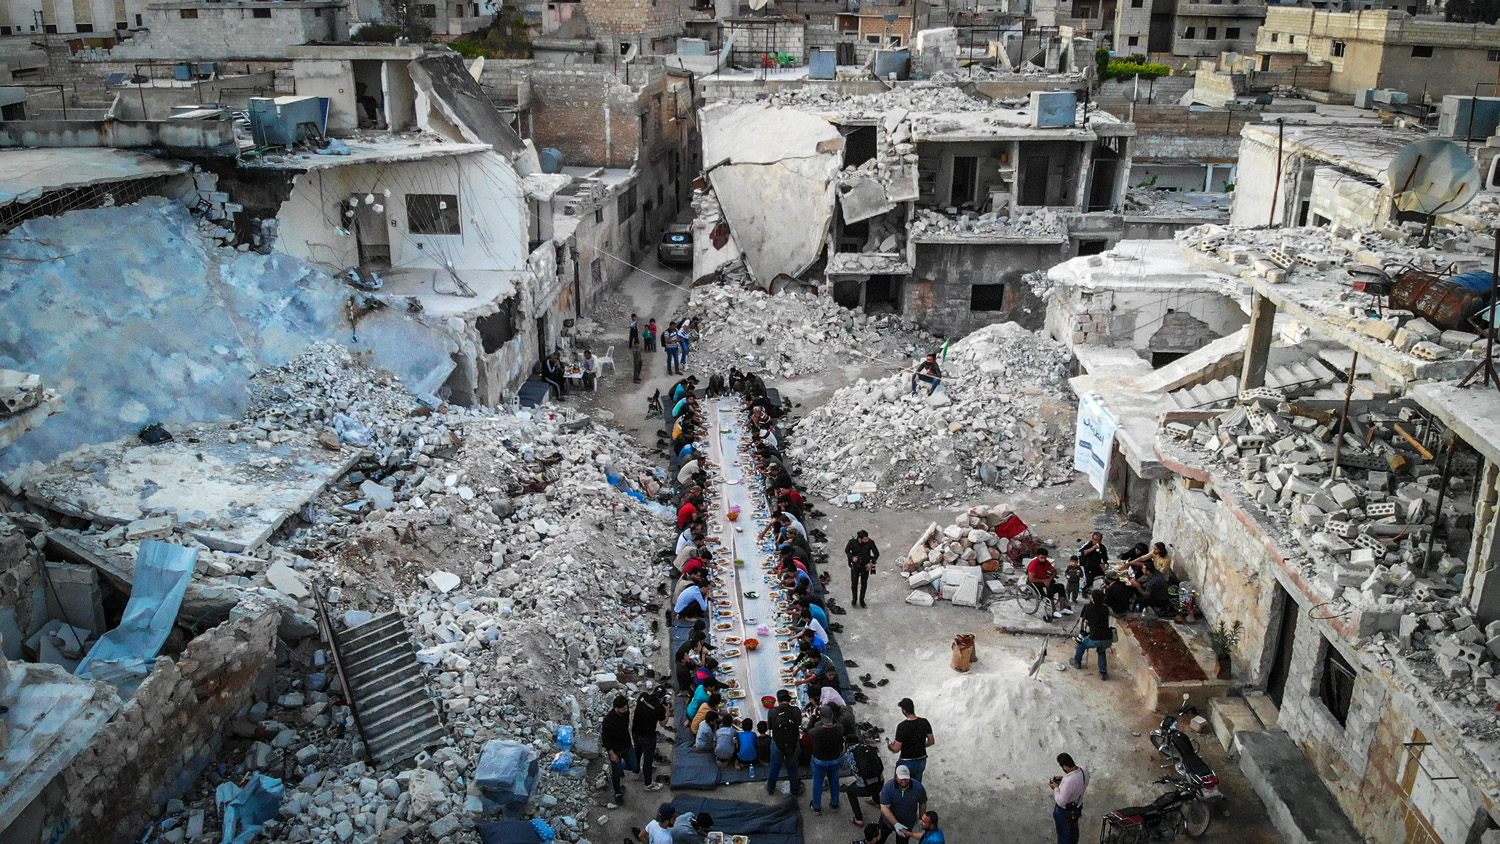 Mouneb Taim won the 'One Shot: As Shot' category of TPOTY 2021 with this image of Idlib, Syria.